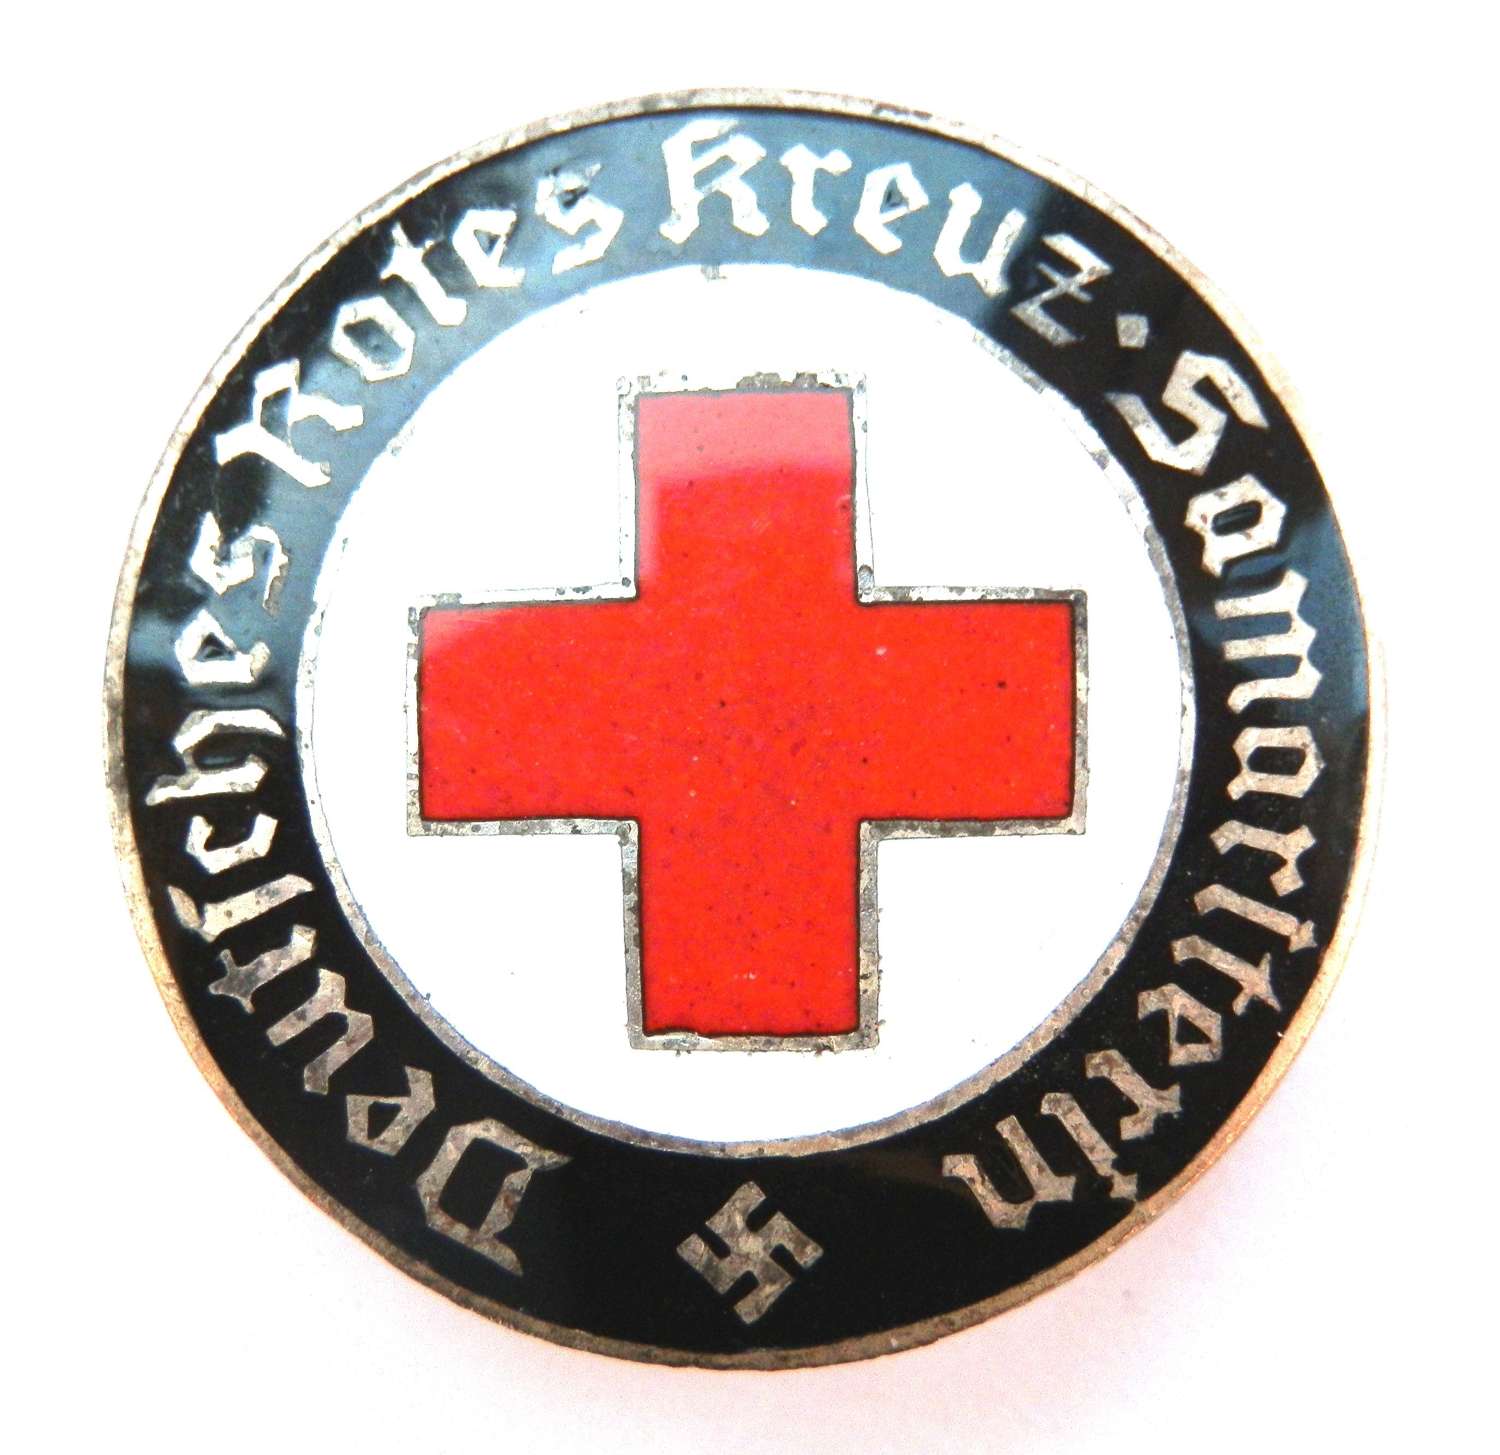 DRK (German Red Cross) service brooch.